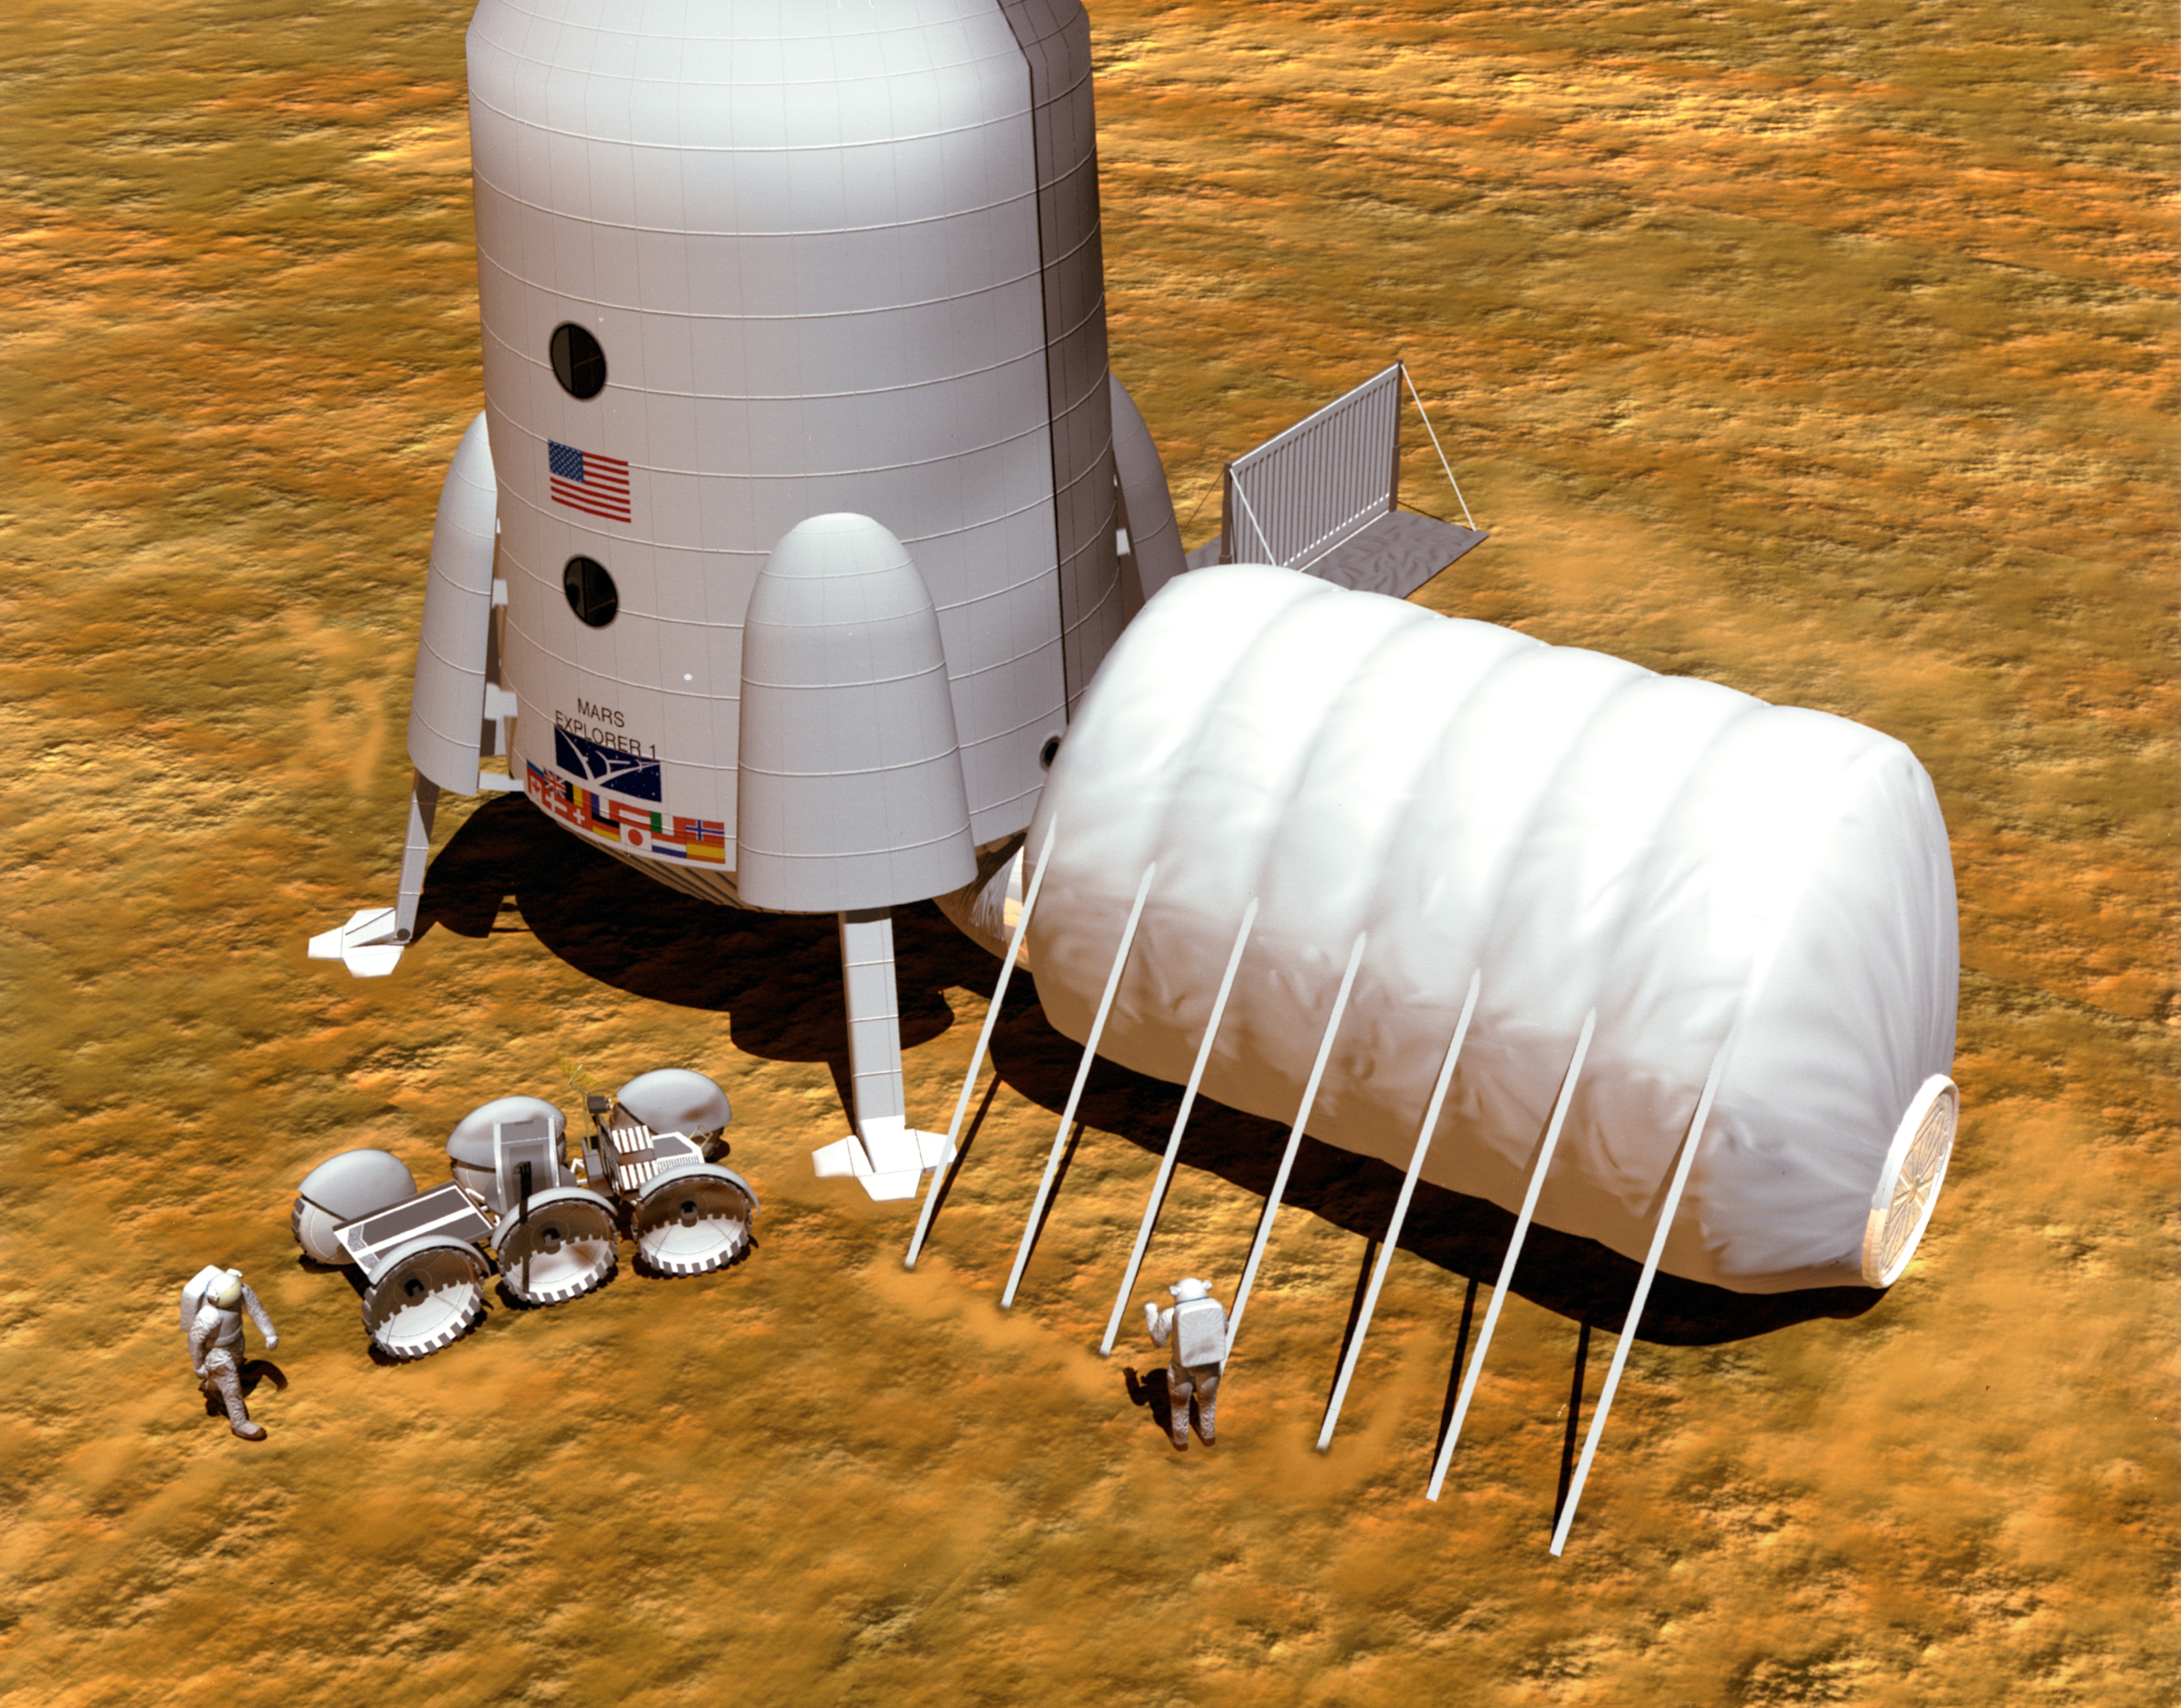 Mars Habitat for NASA